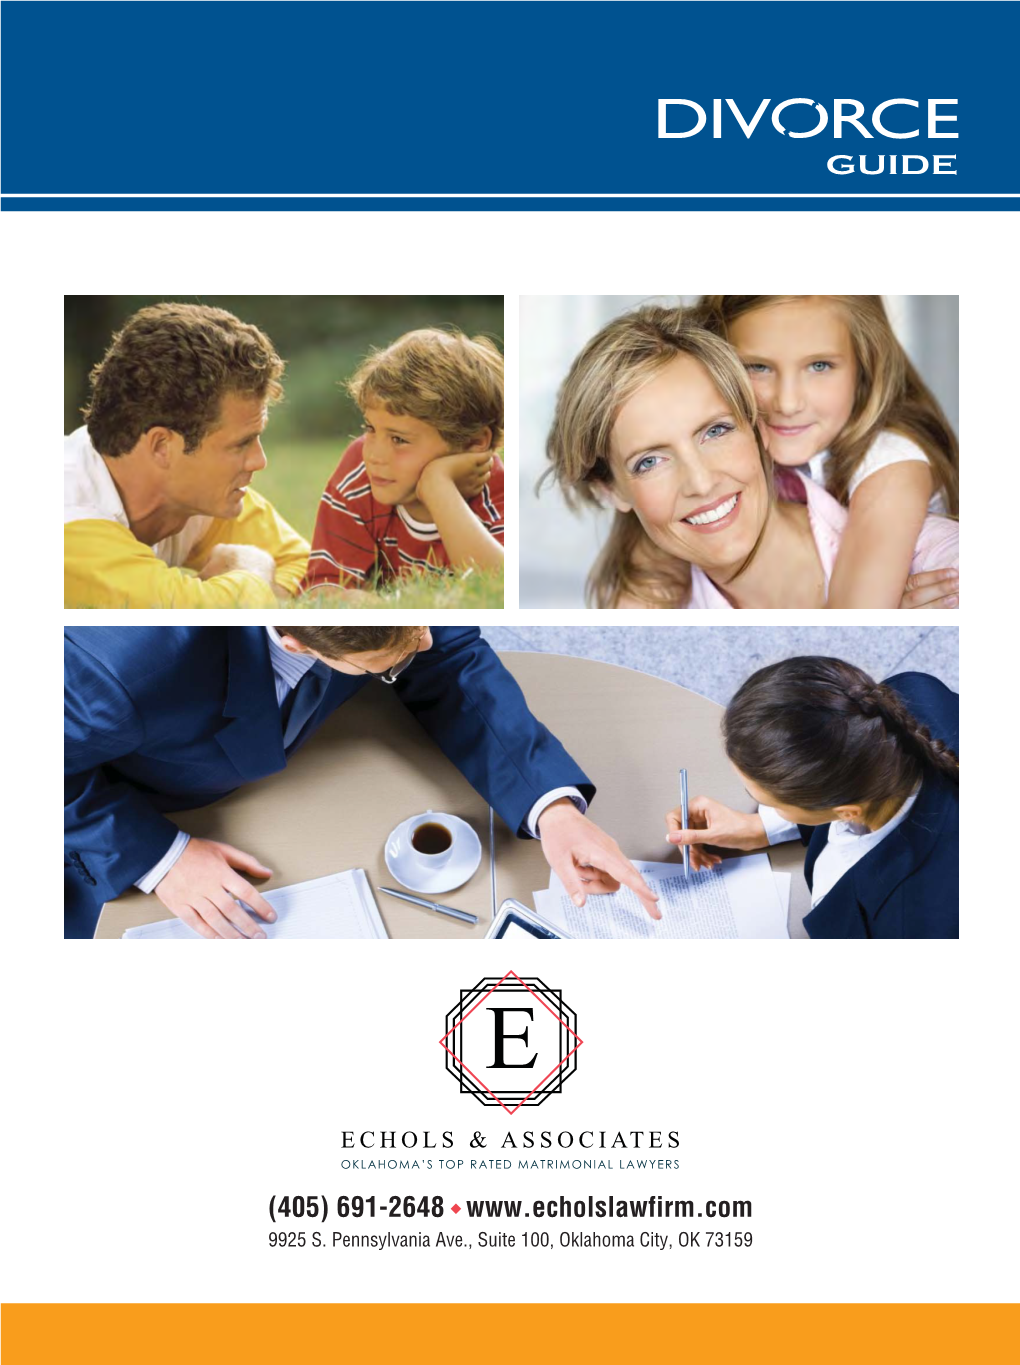 Echols and Associates Divorce Guide